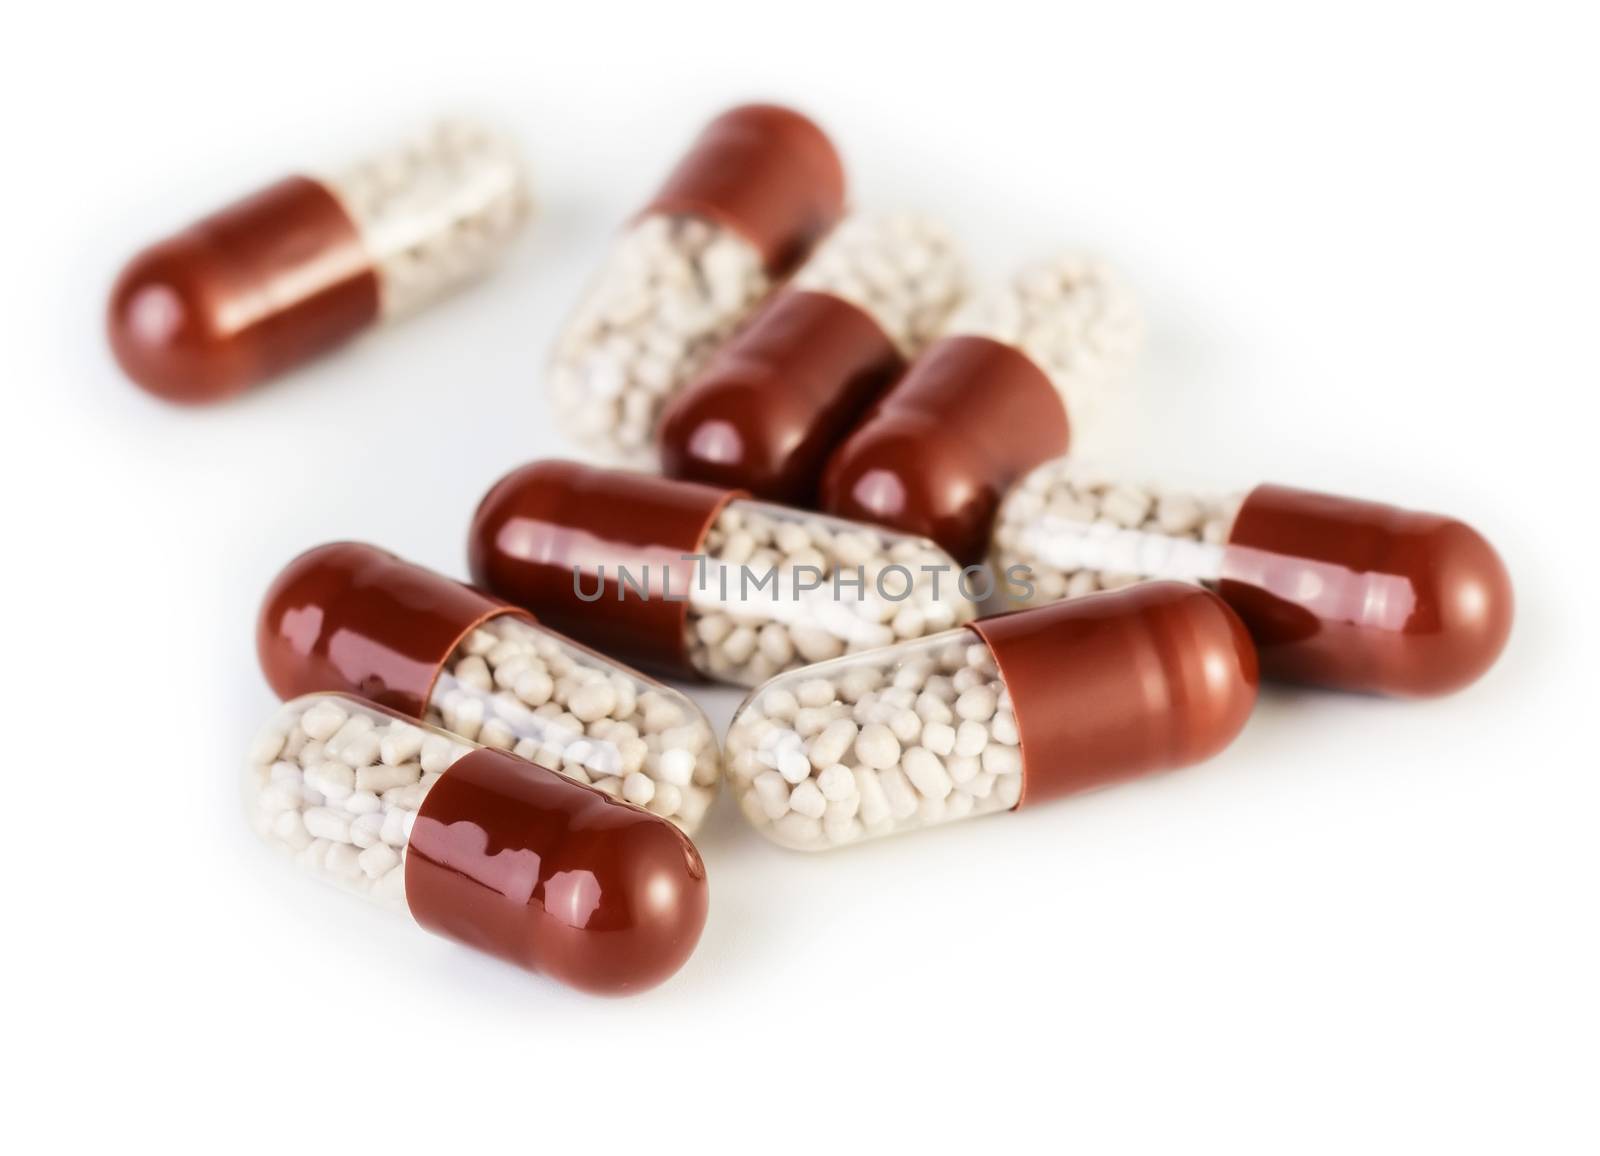 Medical background: capsules isolated on white